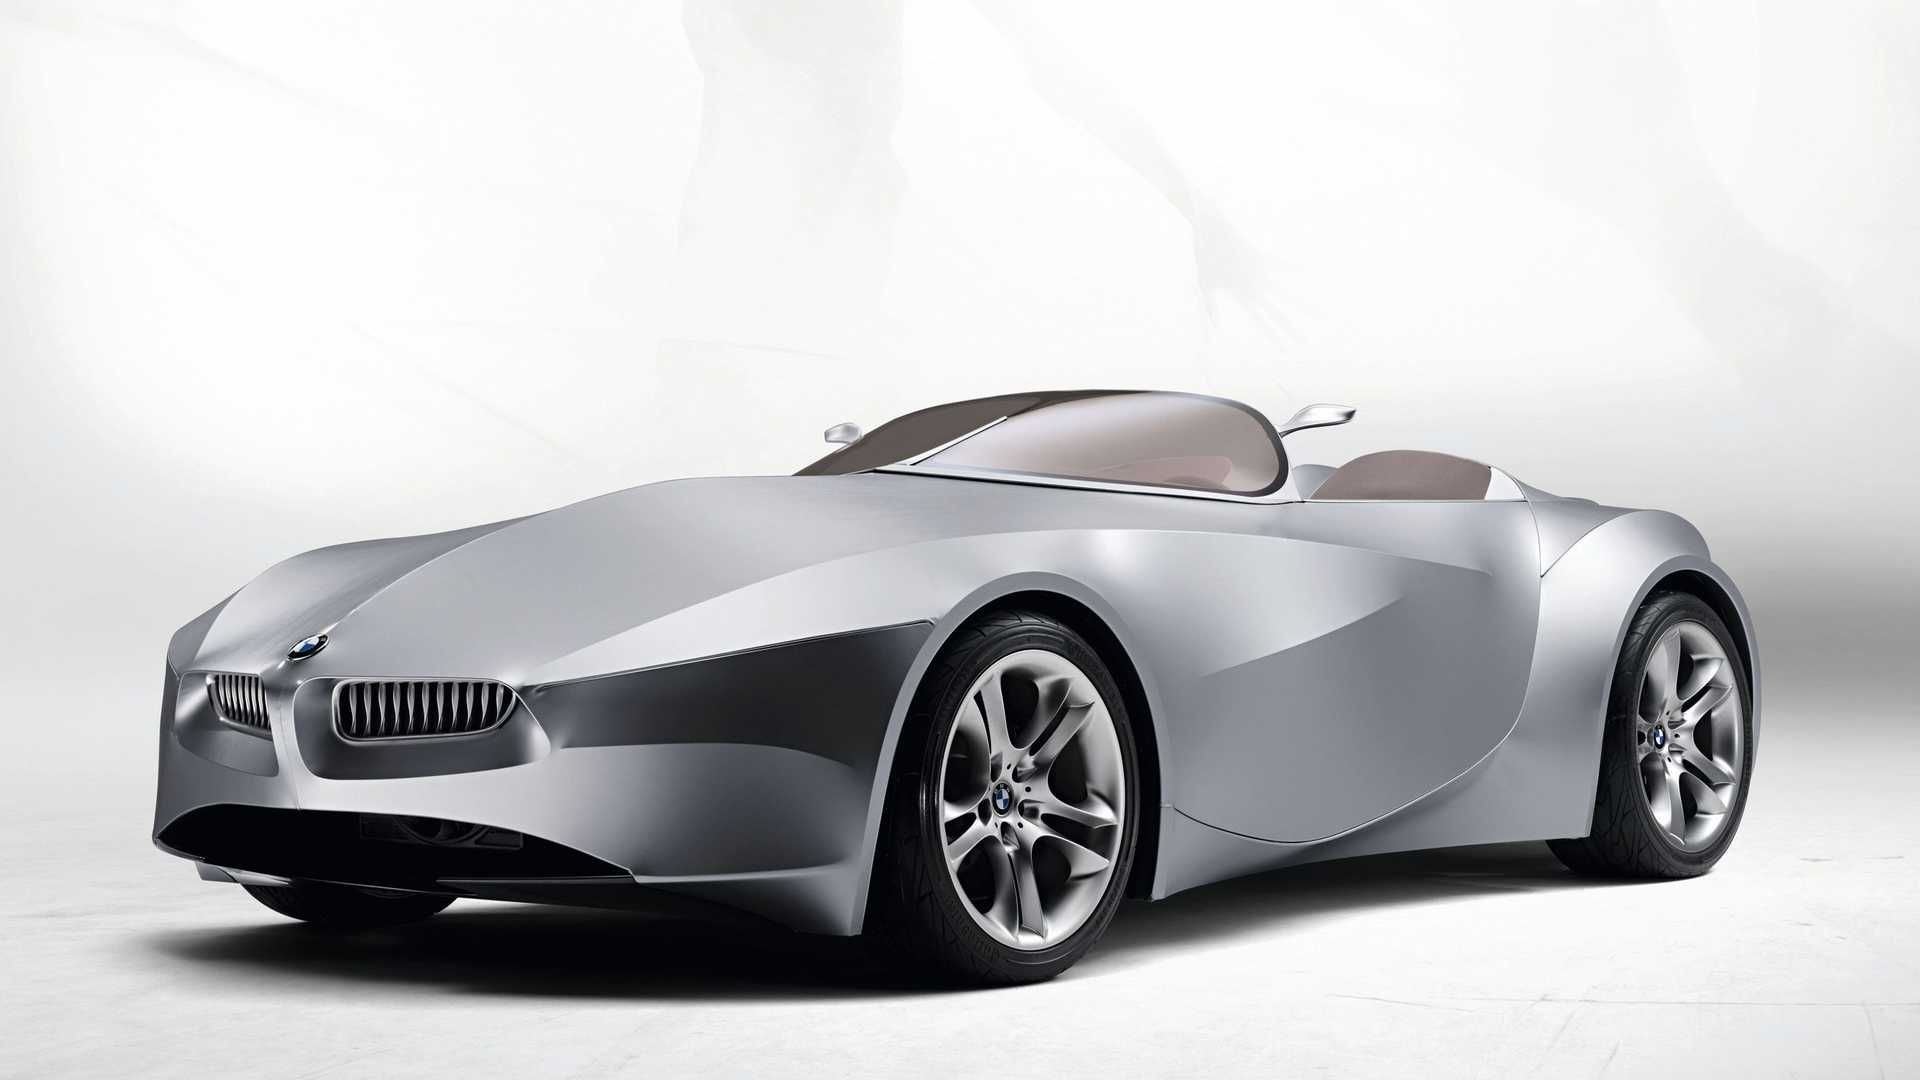 مرجع متخصصين ايران نماي سه چهارم خودروي مفهومي روباز بي ام و گينا / BMW GINA concept convertible